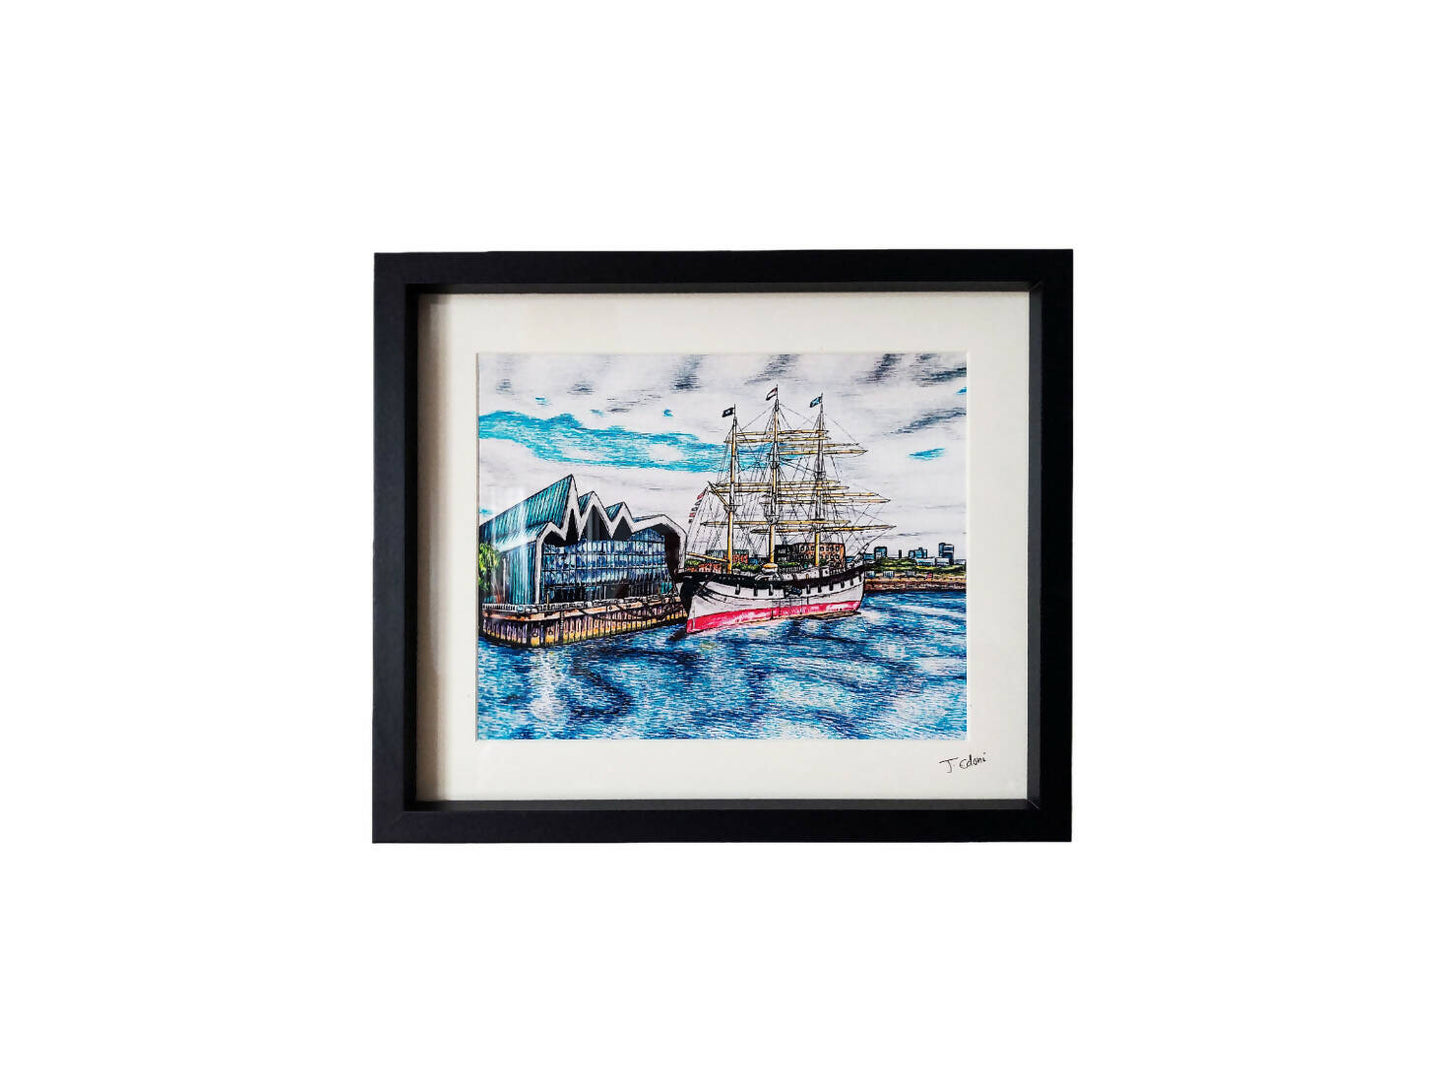 Framed Glasgow Giclee Art print- Riverside Museum and Tall Ship